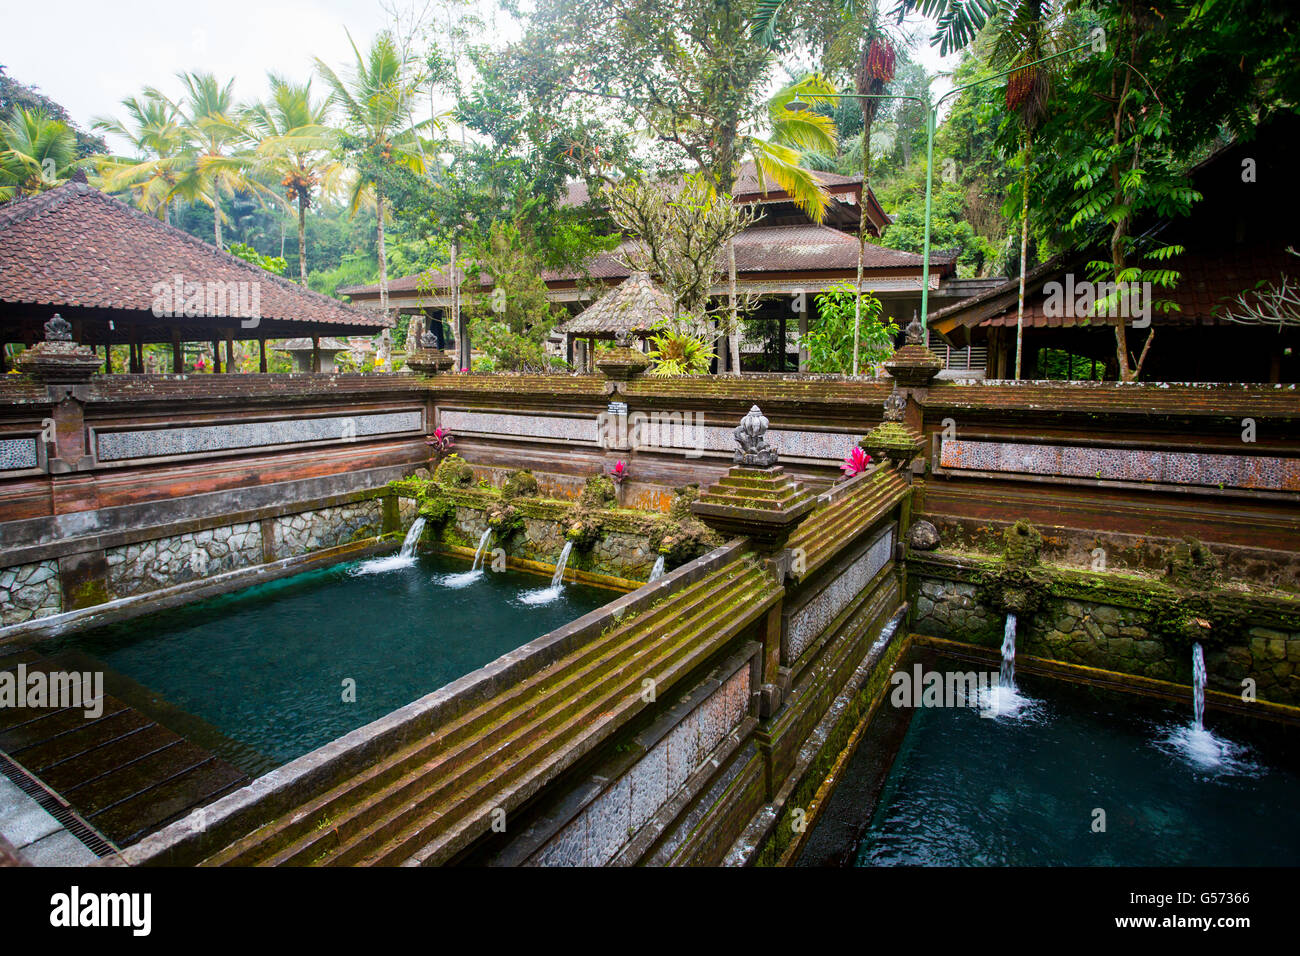 The famous Gunung Kawi Temple in Sebatu, Tegallalang, Bali